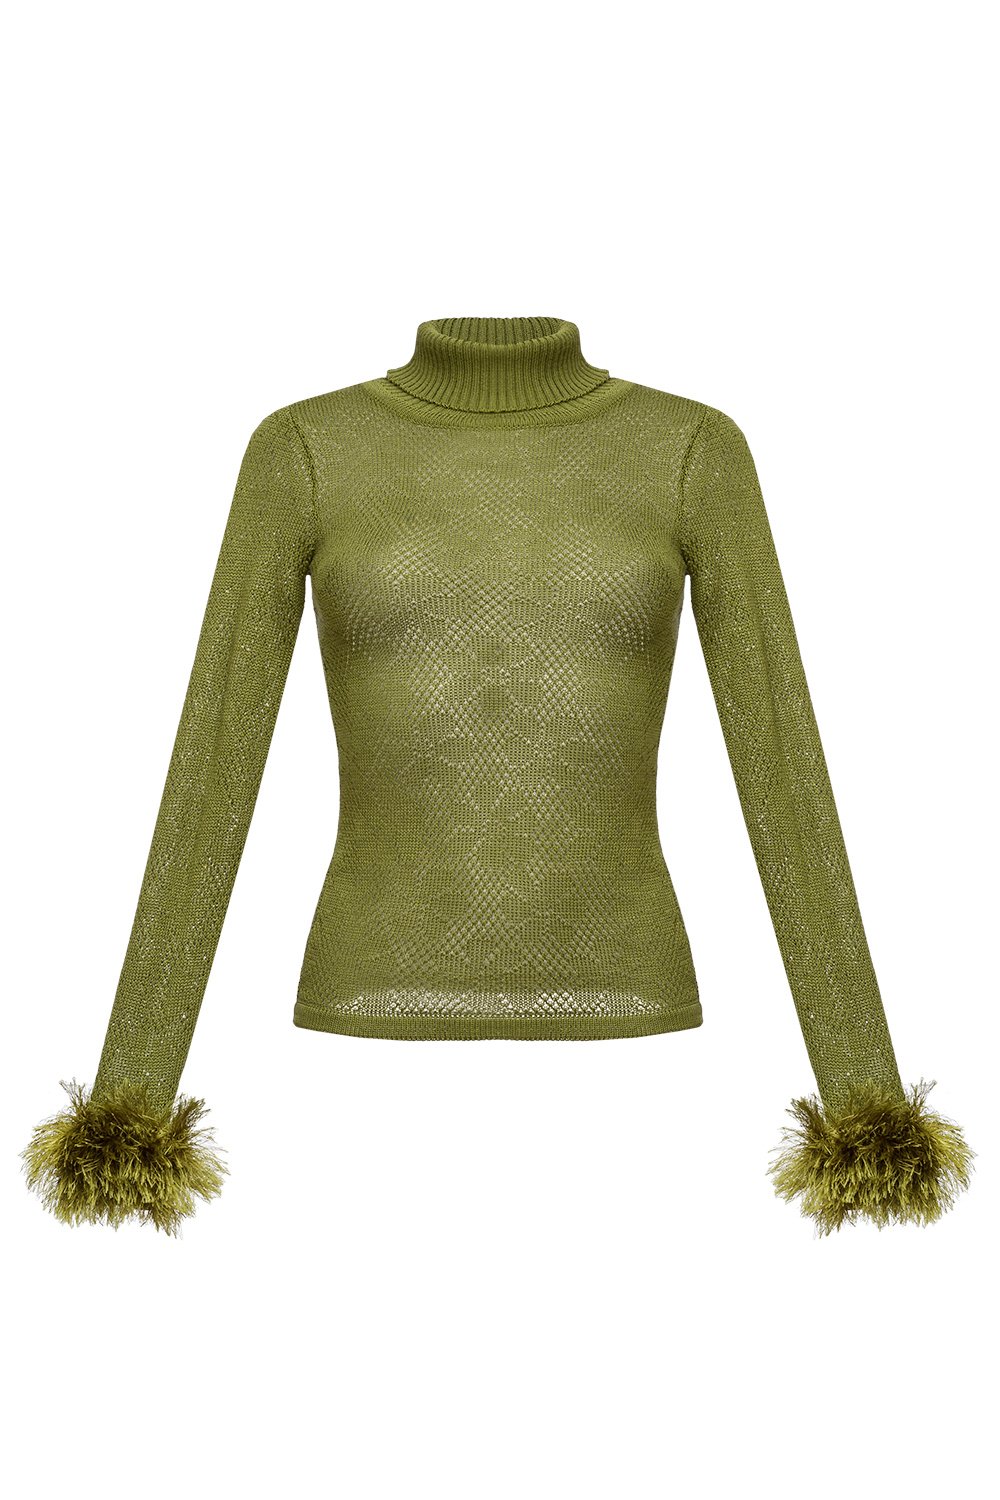 Shop Andreeva Women's Green Knit Turtleneck With Handmade Knit Details